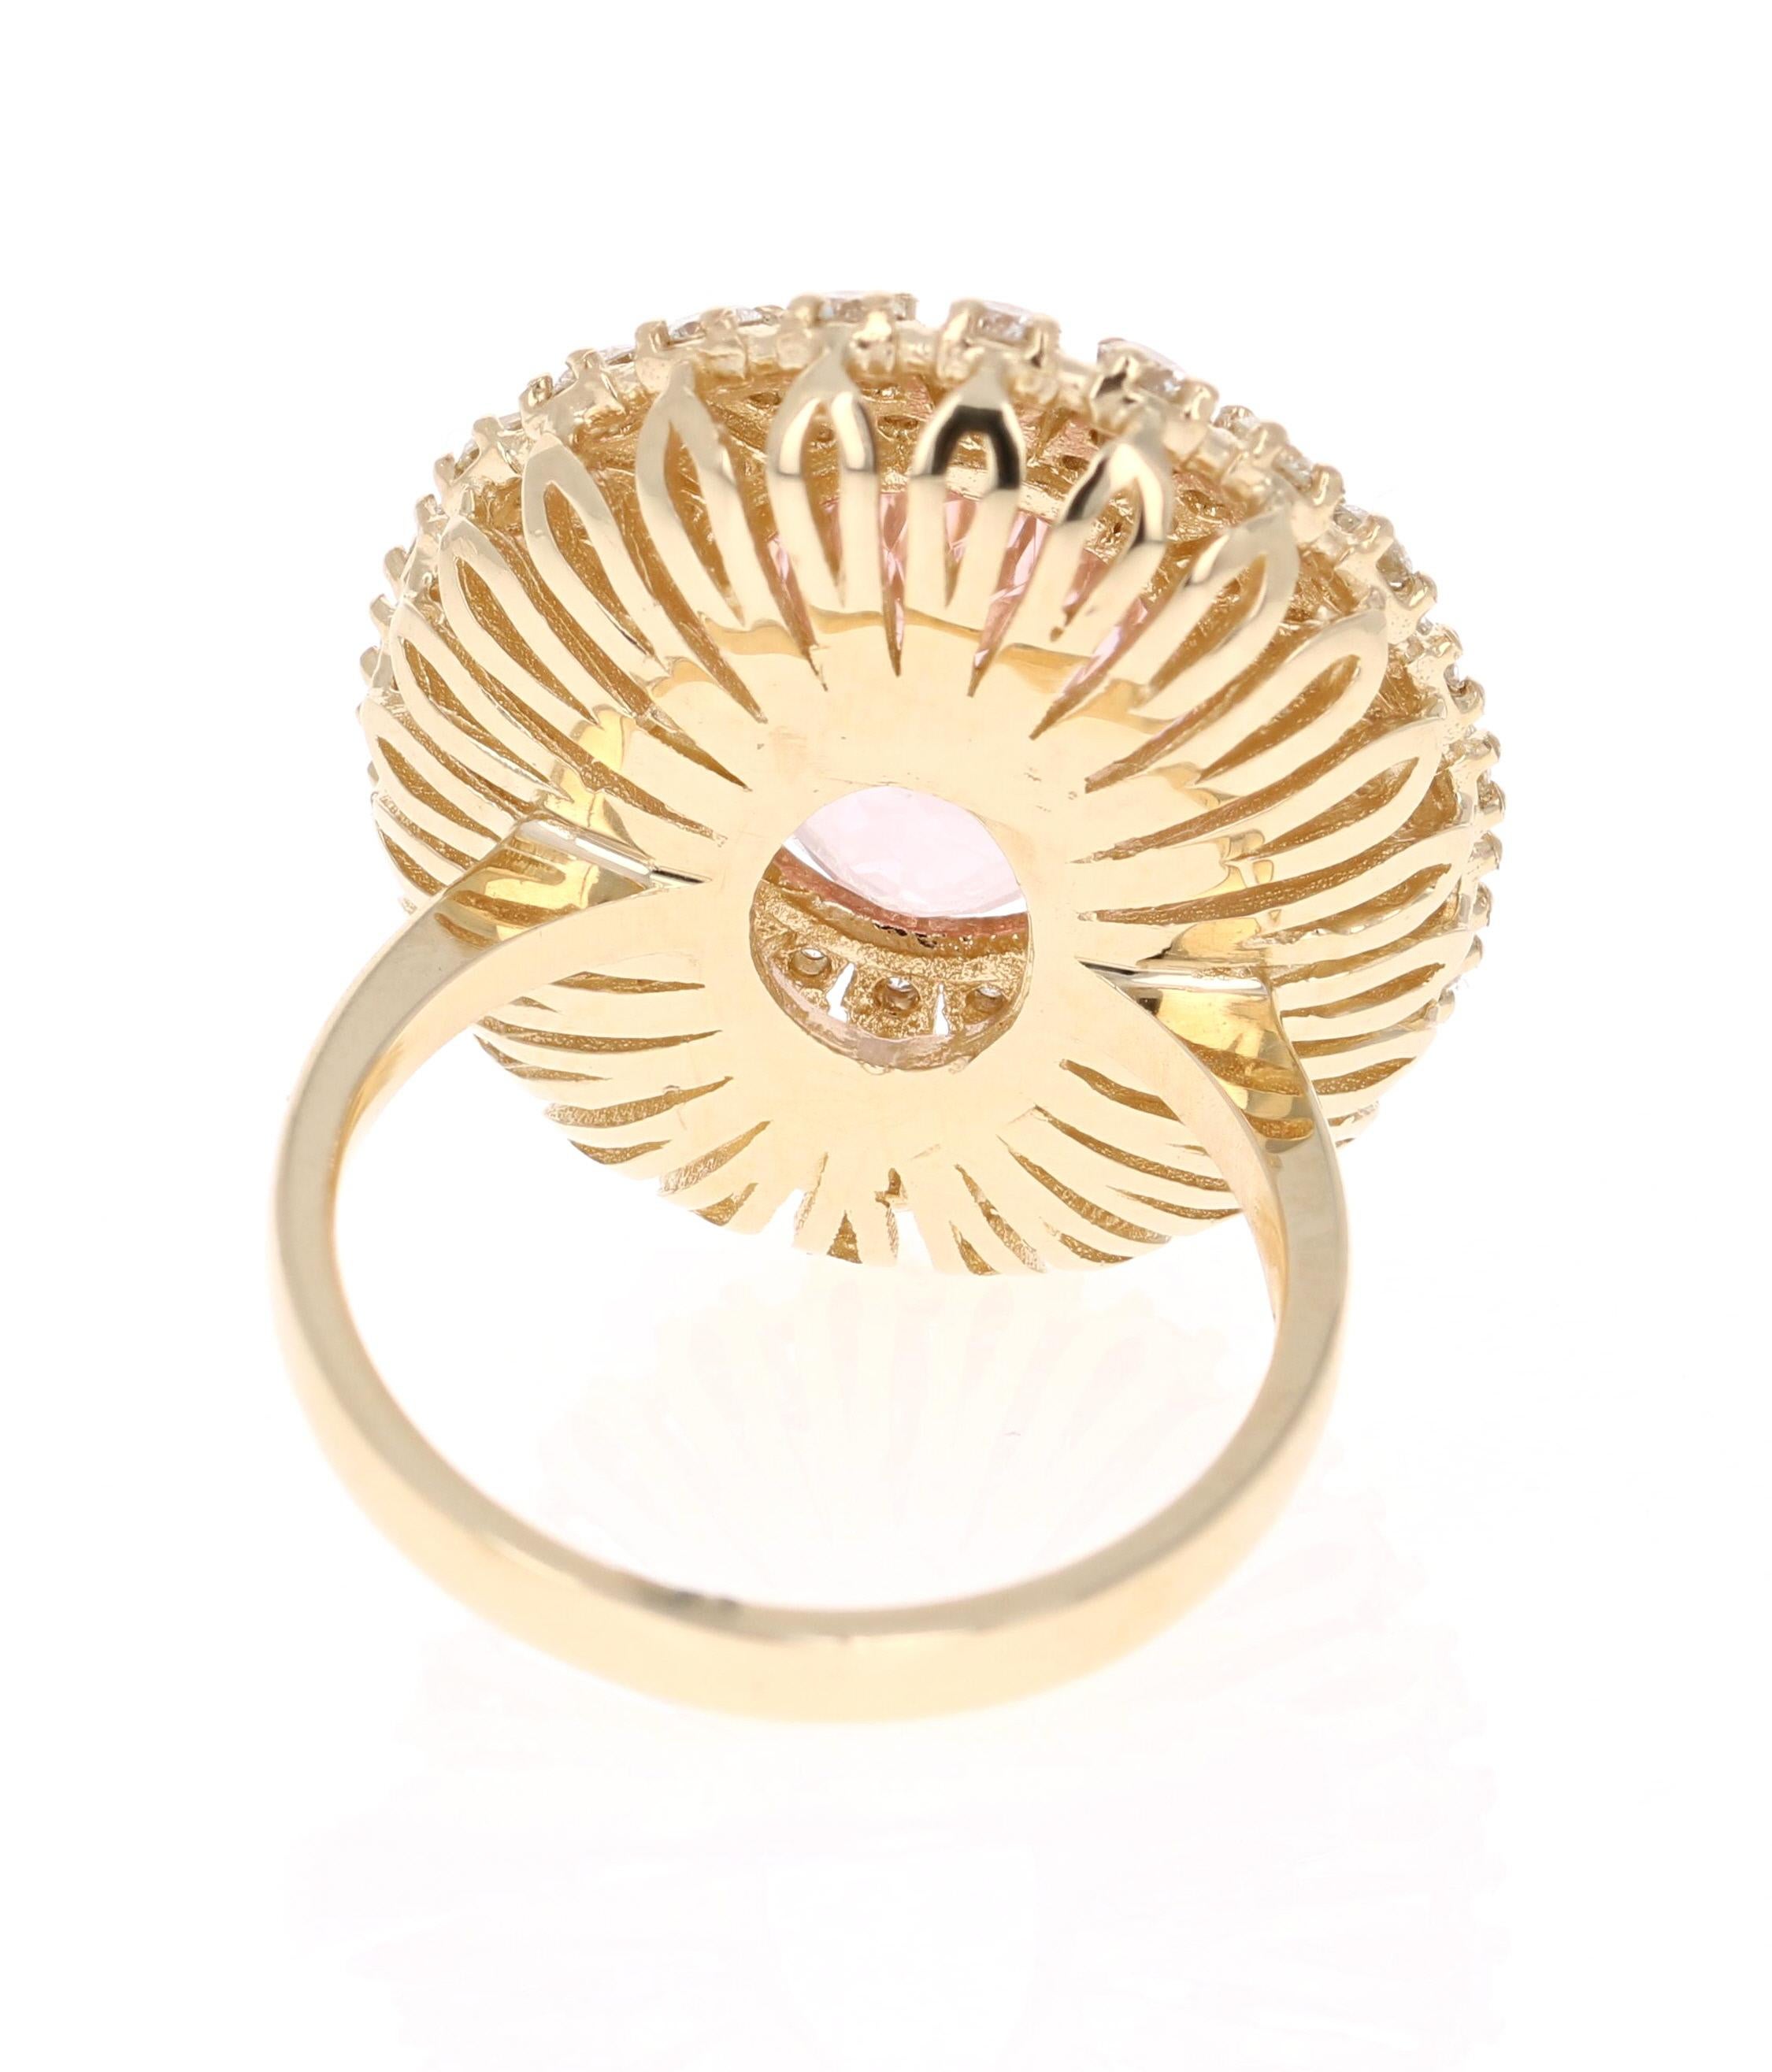 Modern 7.24 Carat Oval Cut Pink Morganite Diamond Yellow Gold Cocktail Ring